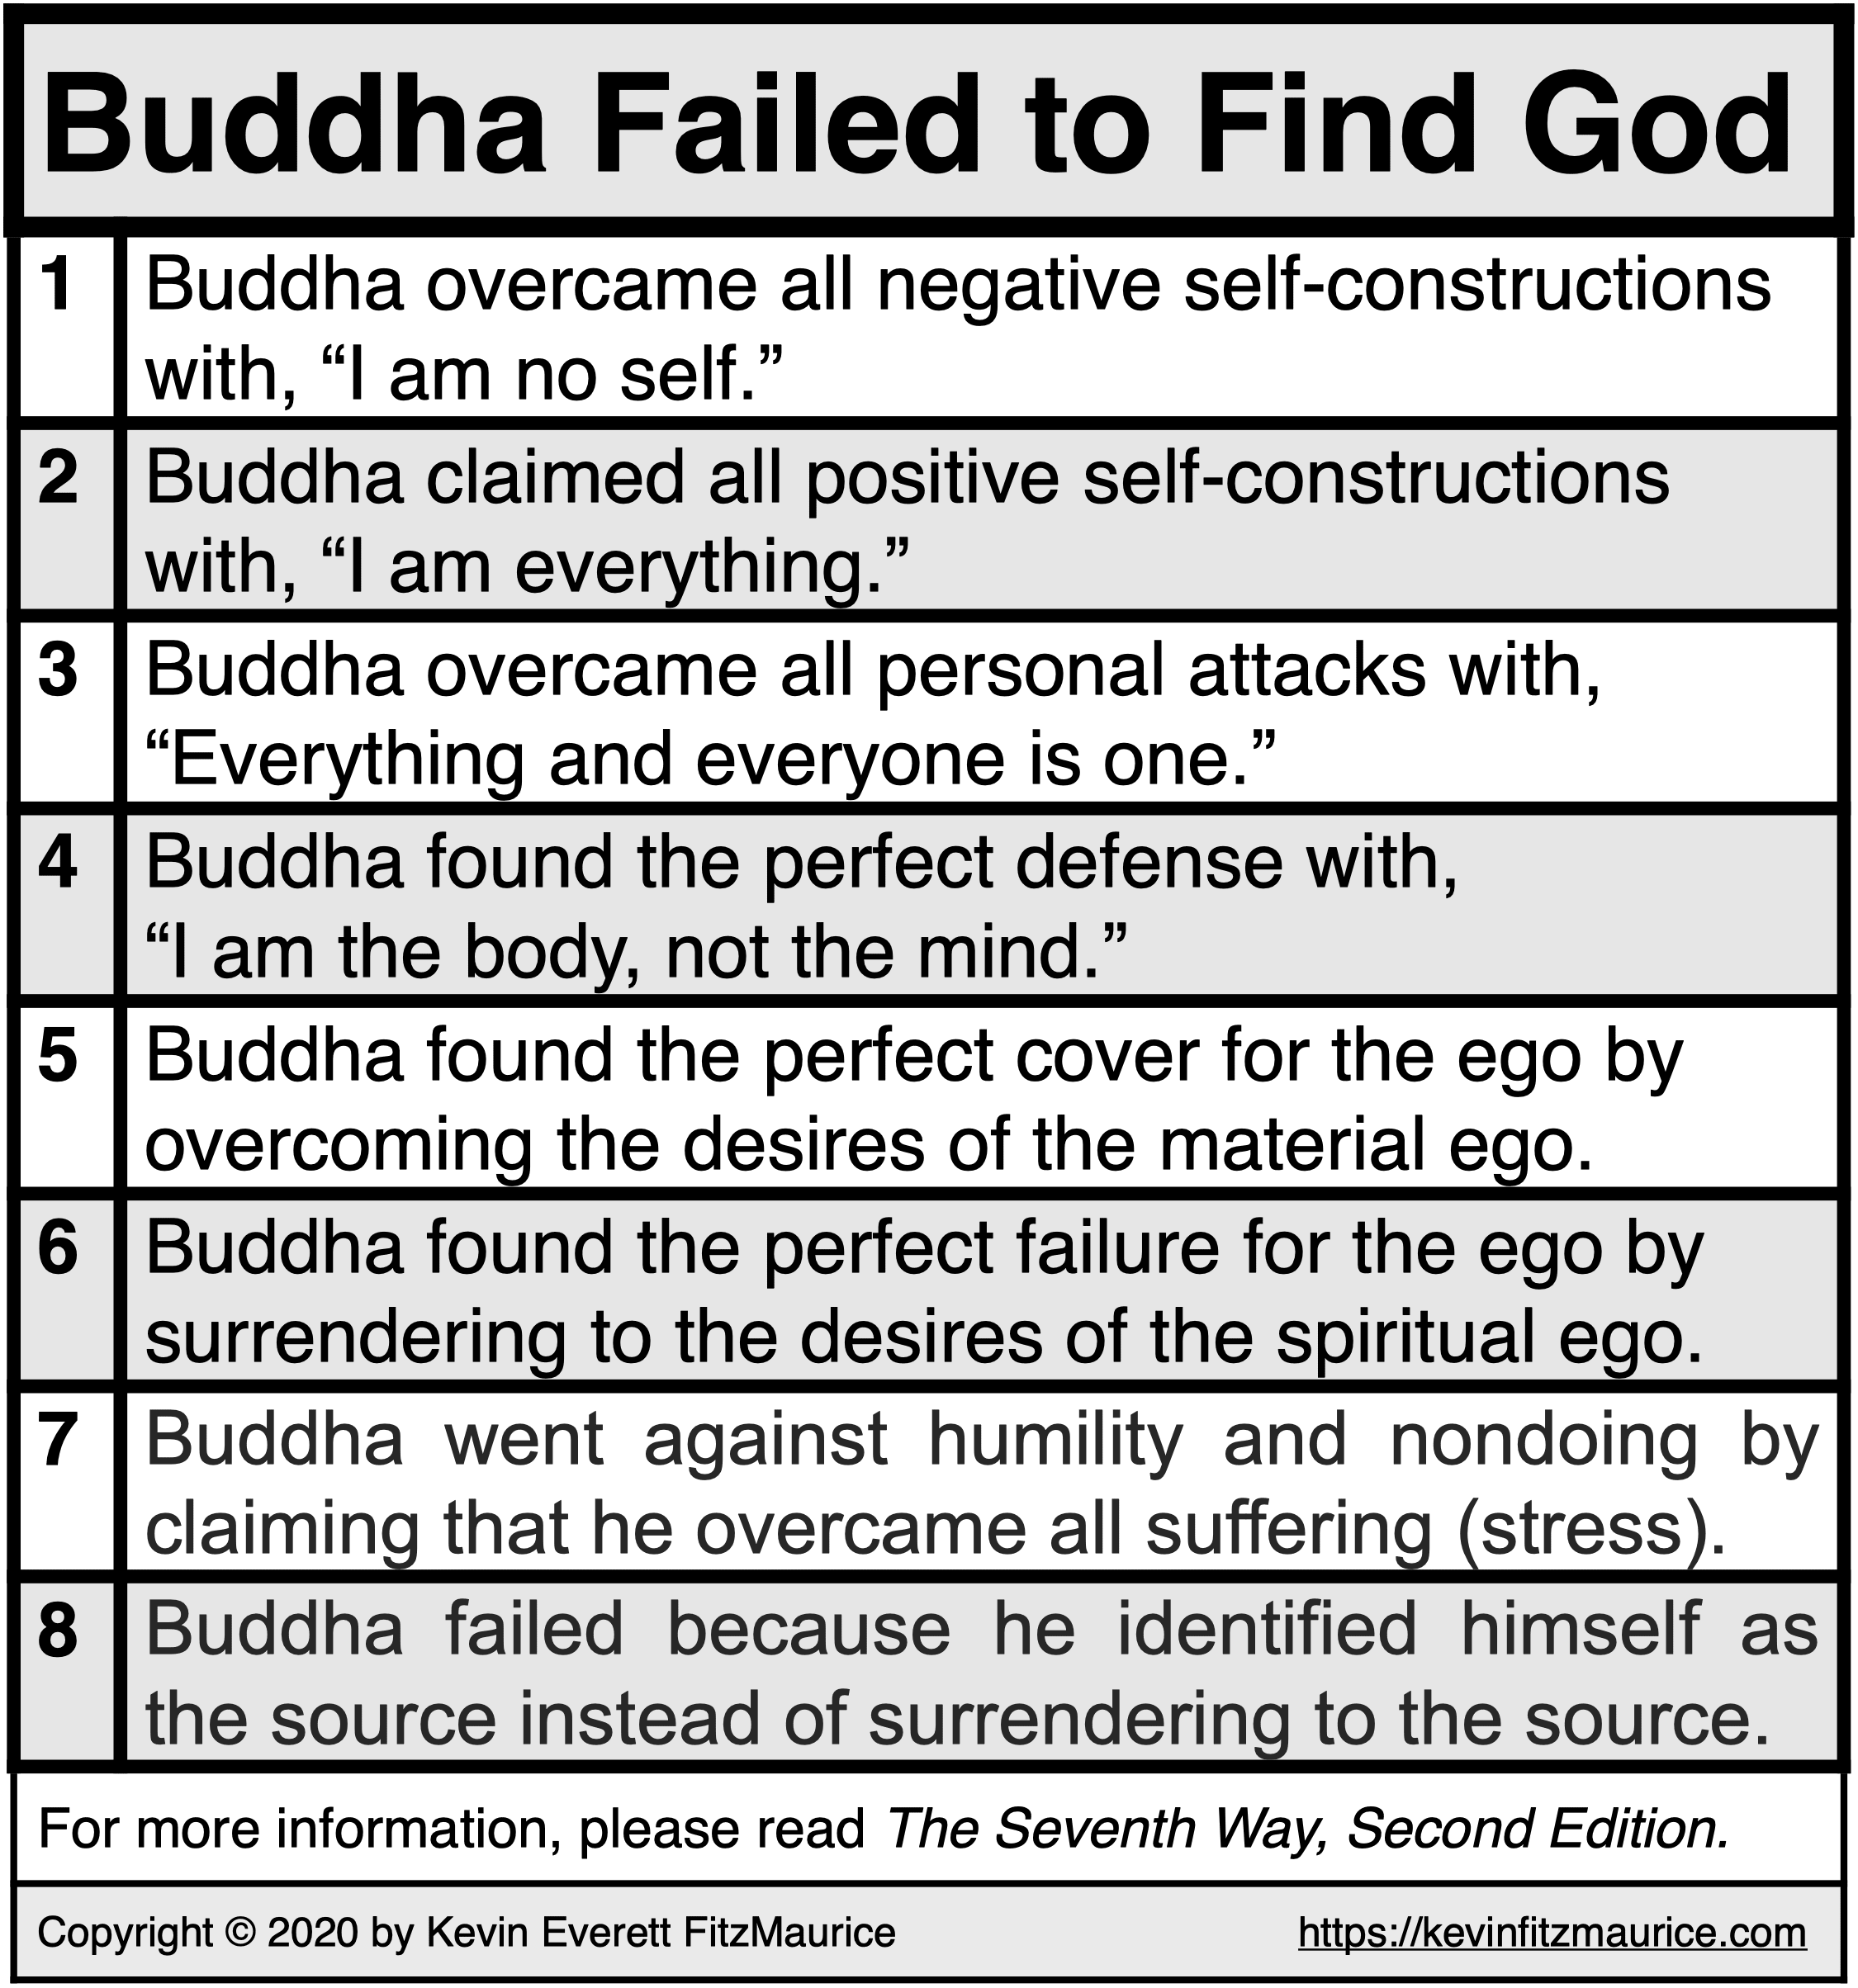 Buddha Failed to Find God